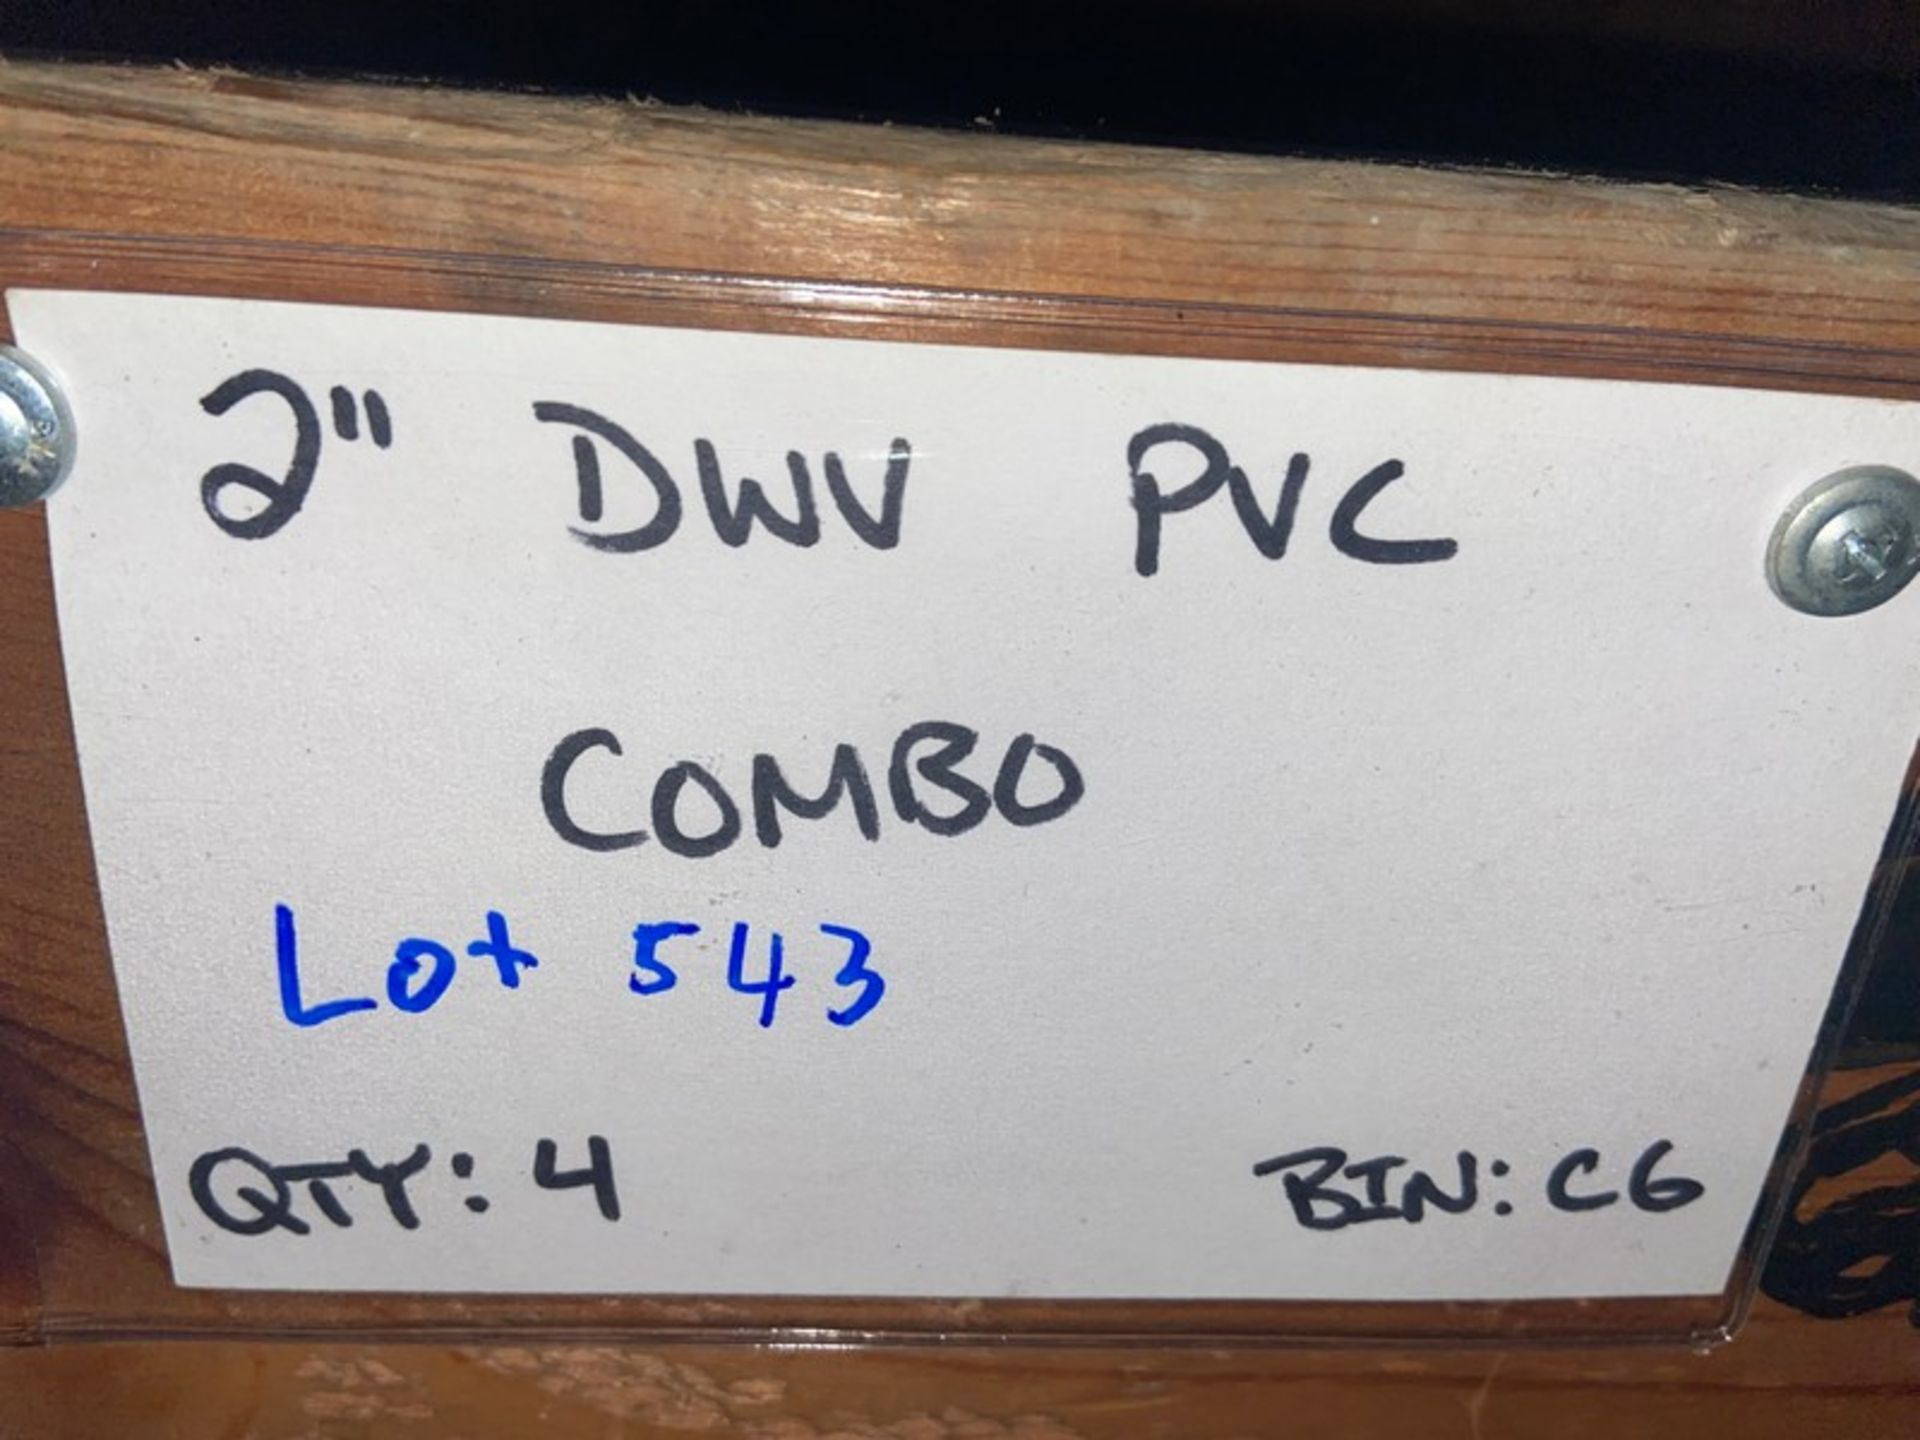 (4) 2” DWV PVC COMBO (Bin:C6); (2) DWV PVC TEE (Bin:C6) (LOCATED IN MONROEVILLE, PA) - Image 8 of 8